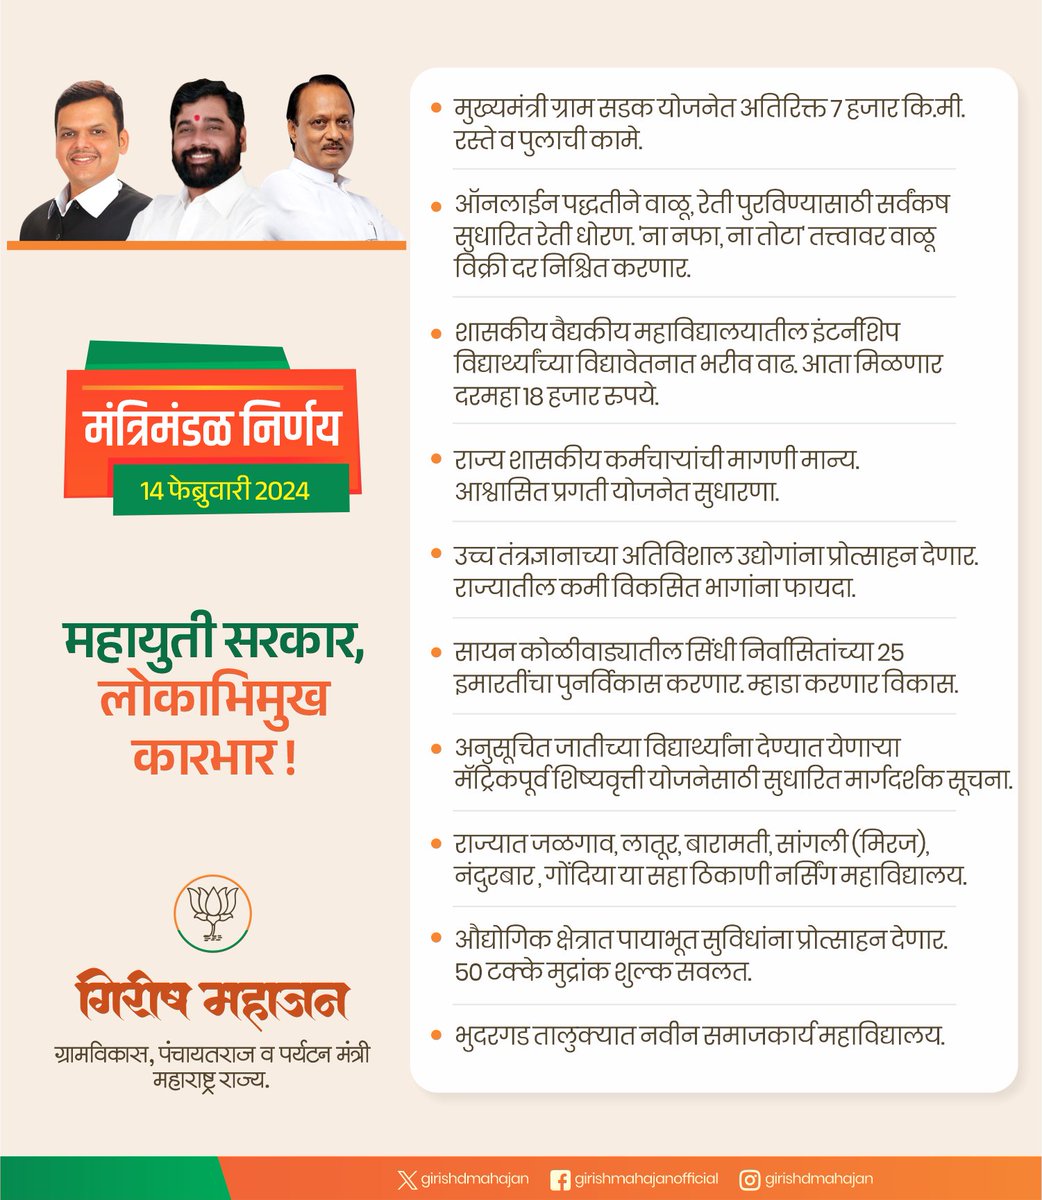 मंत्रिमंडळ निर्णय !

#Maharashtra #CabinetDecisions #मंत्रिमंडळनिर्णय